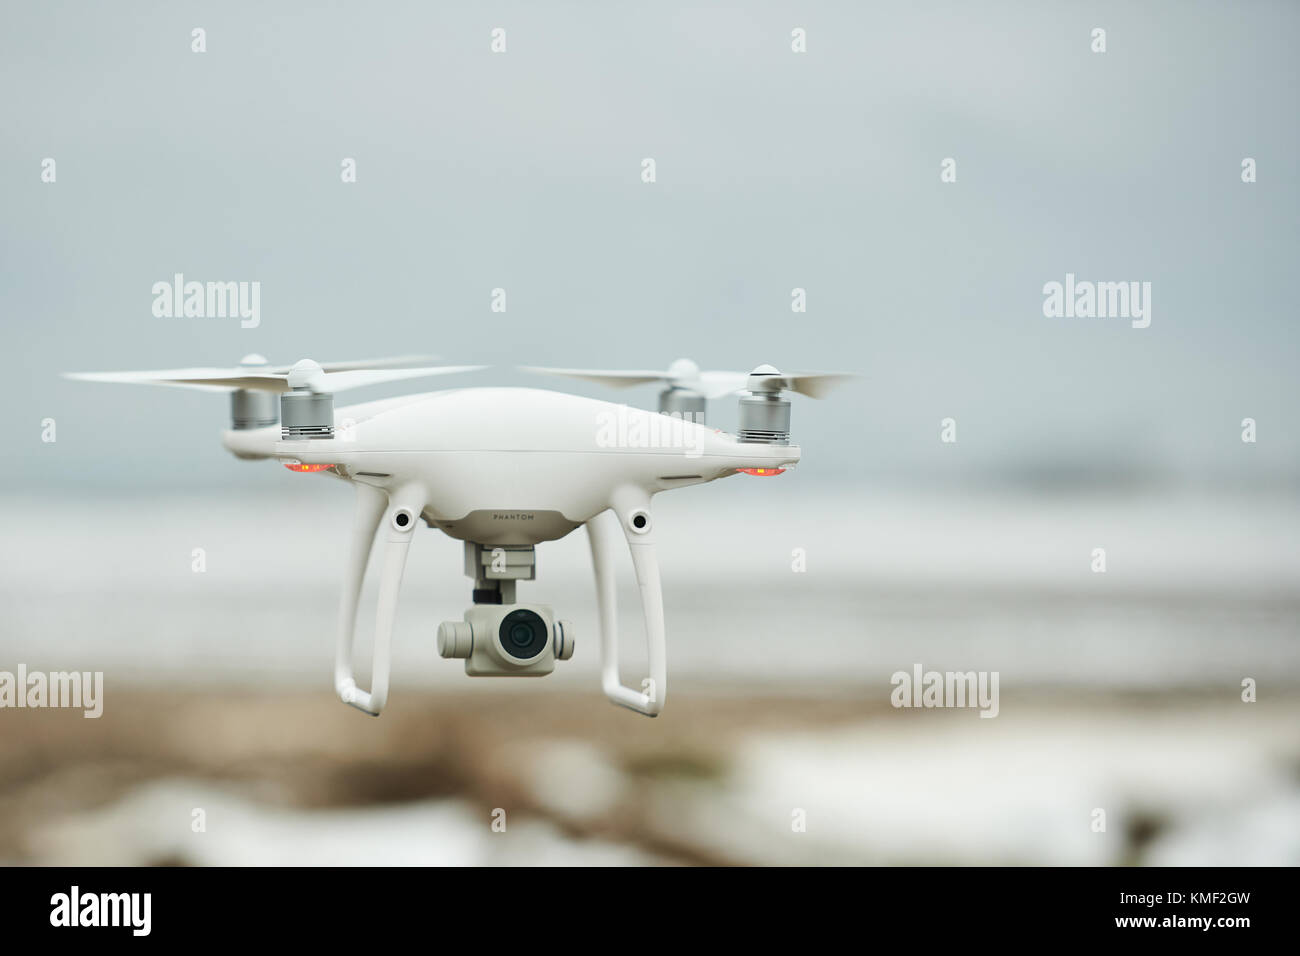 Dji phantom 4 pro drone fotografías e imágenes de alta resolución - Alamy